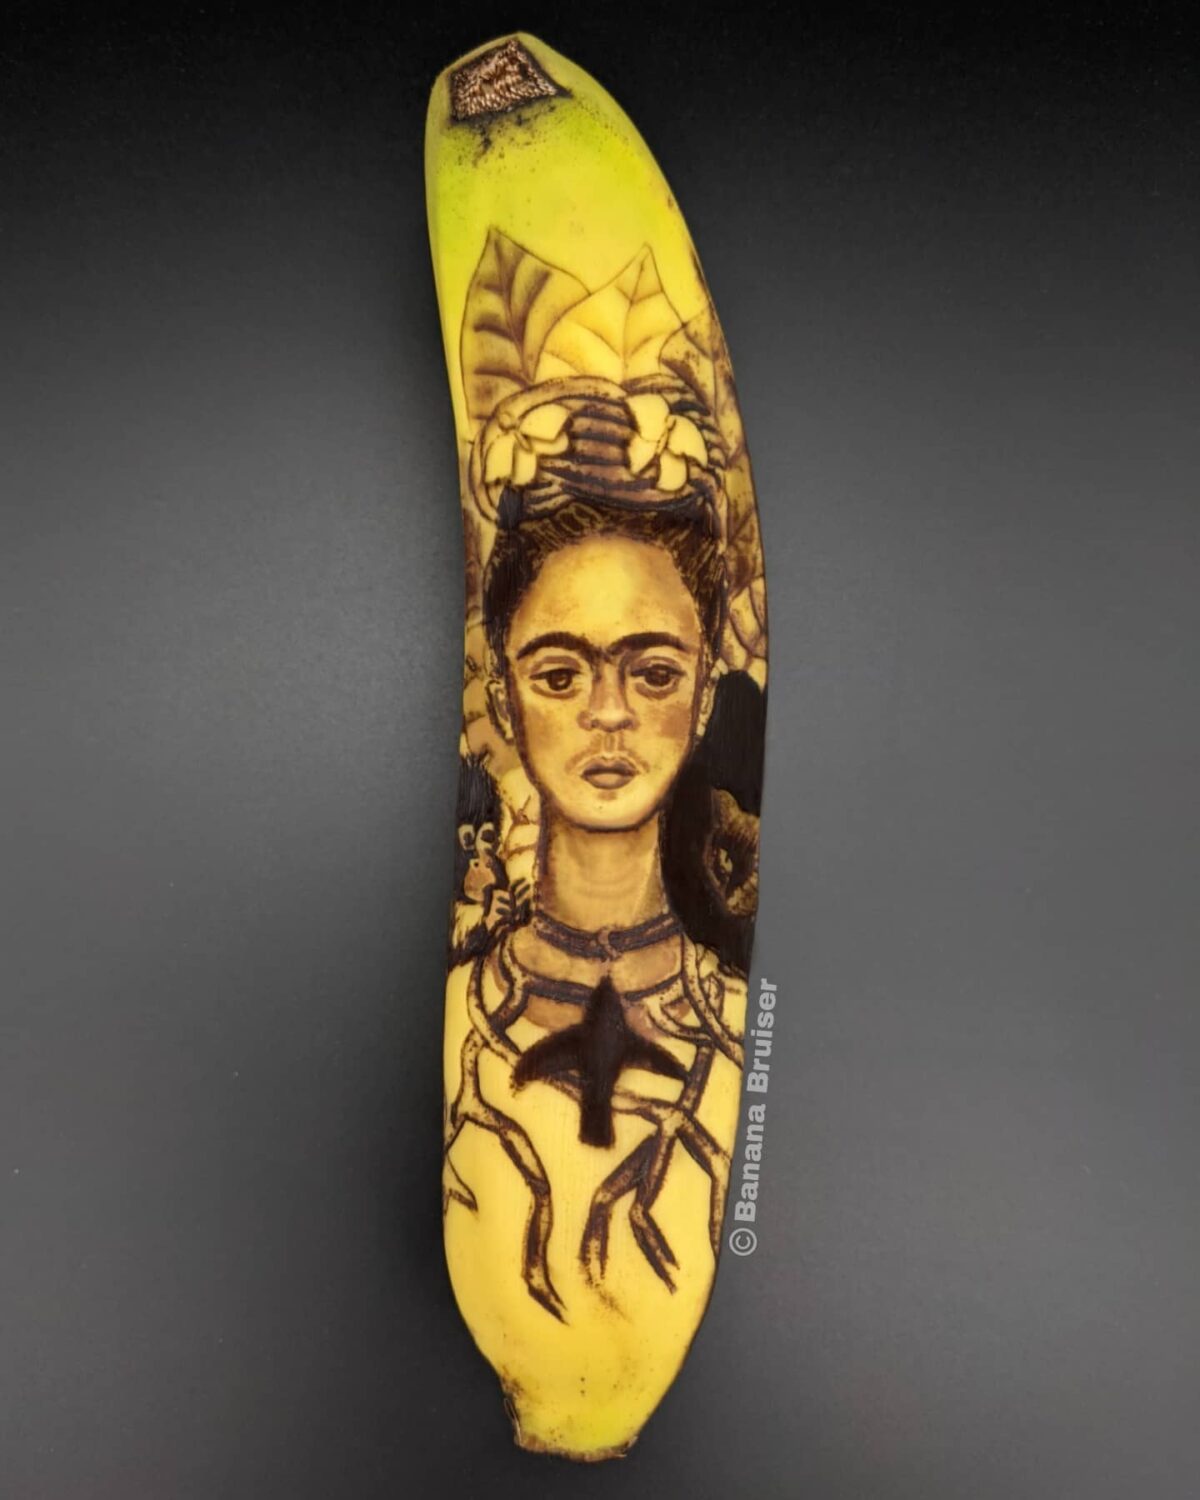 The Bruised Banana Art Of Anna Chojnicka 18